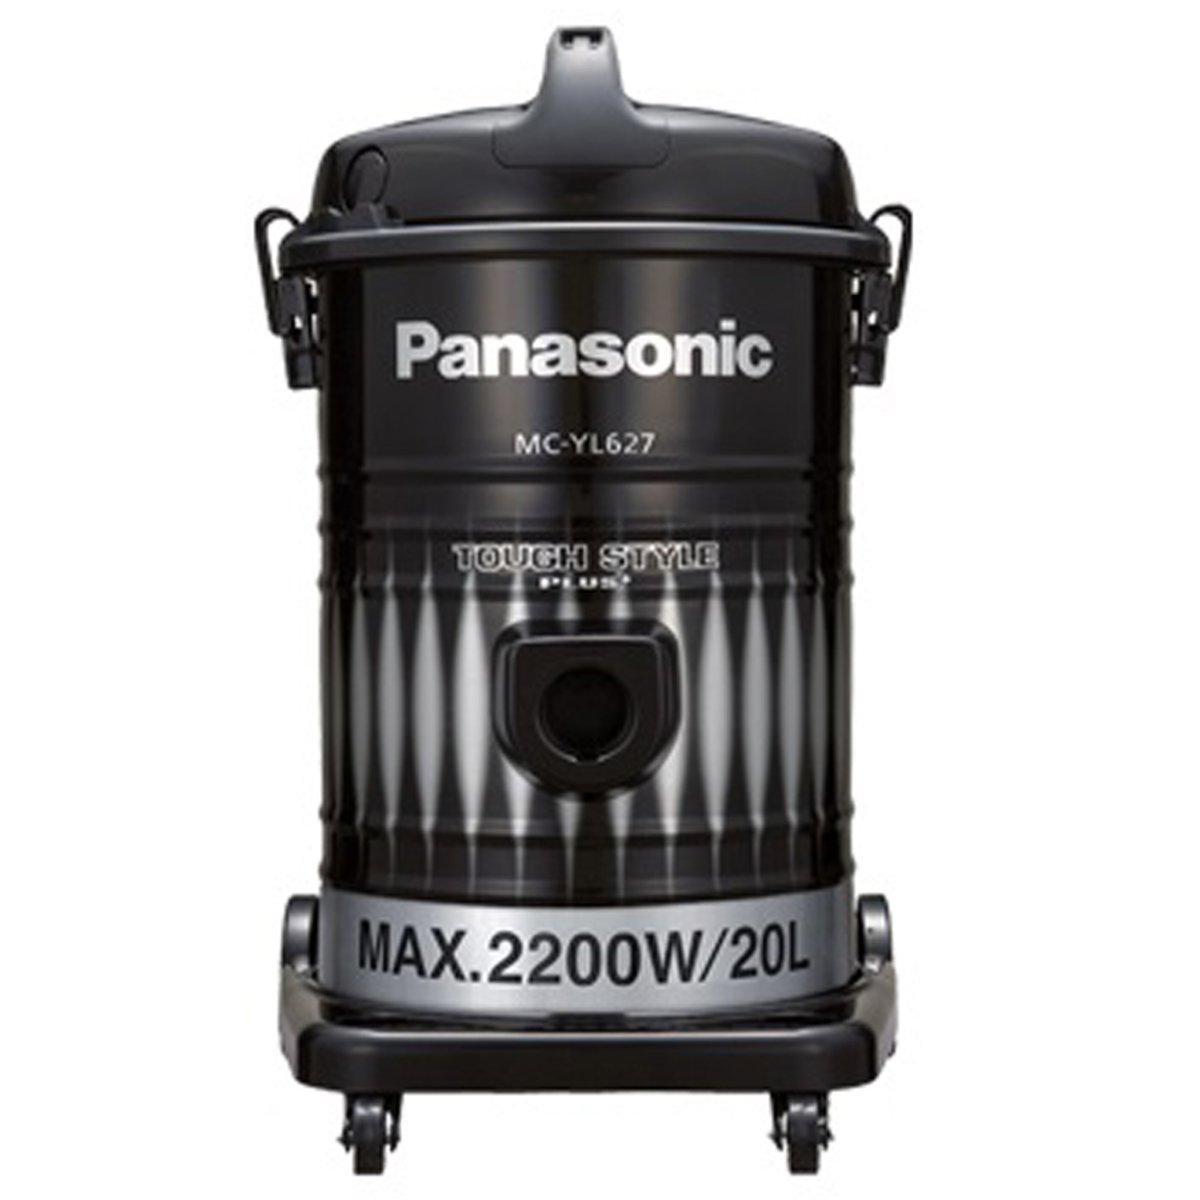 Panasonic Vacuum Cleaner MCYL627